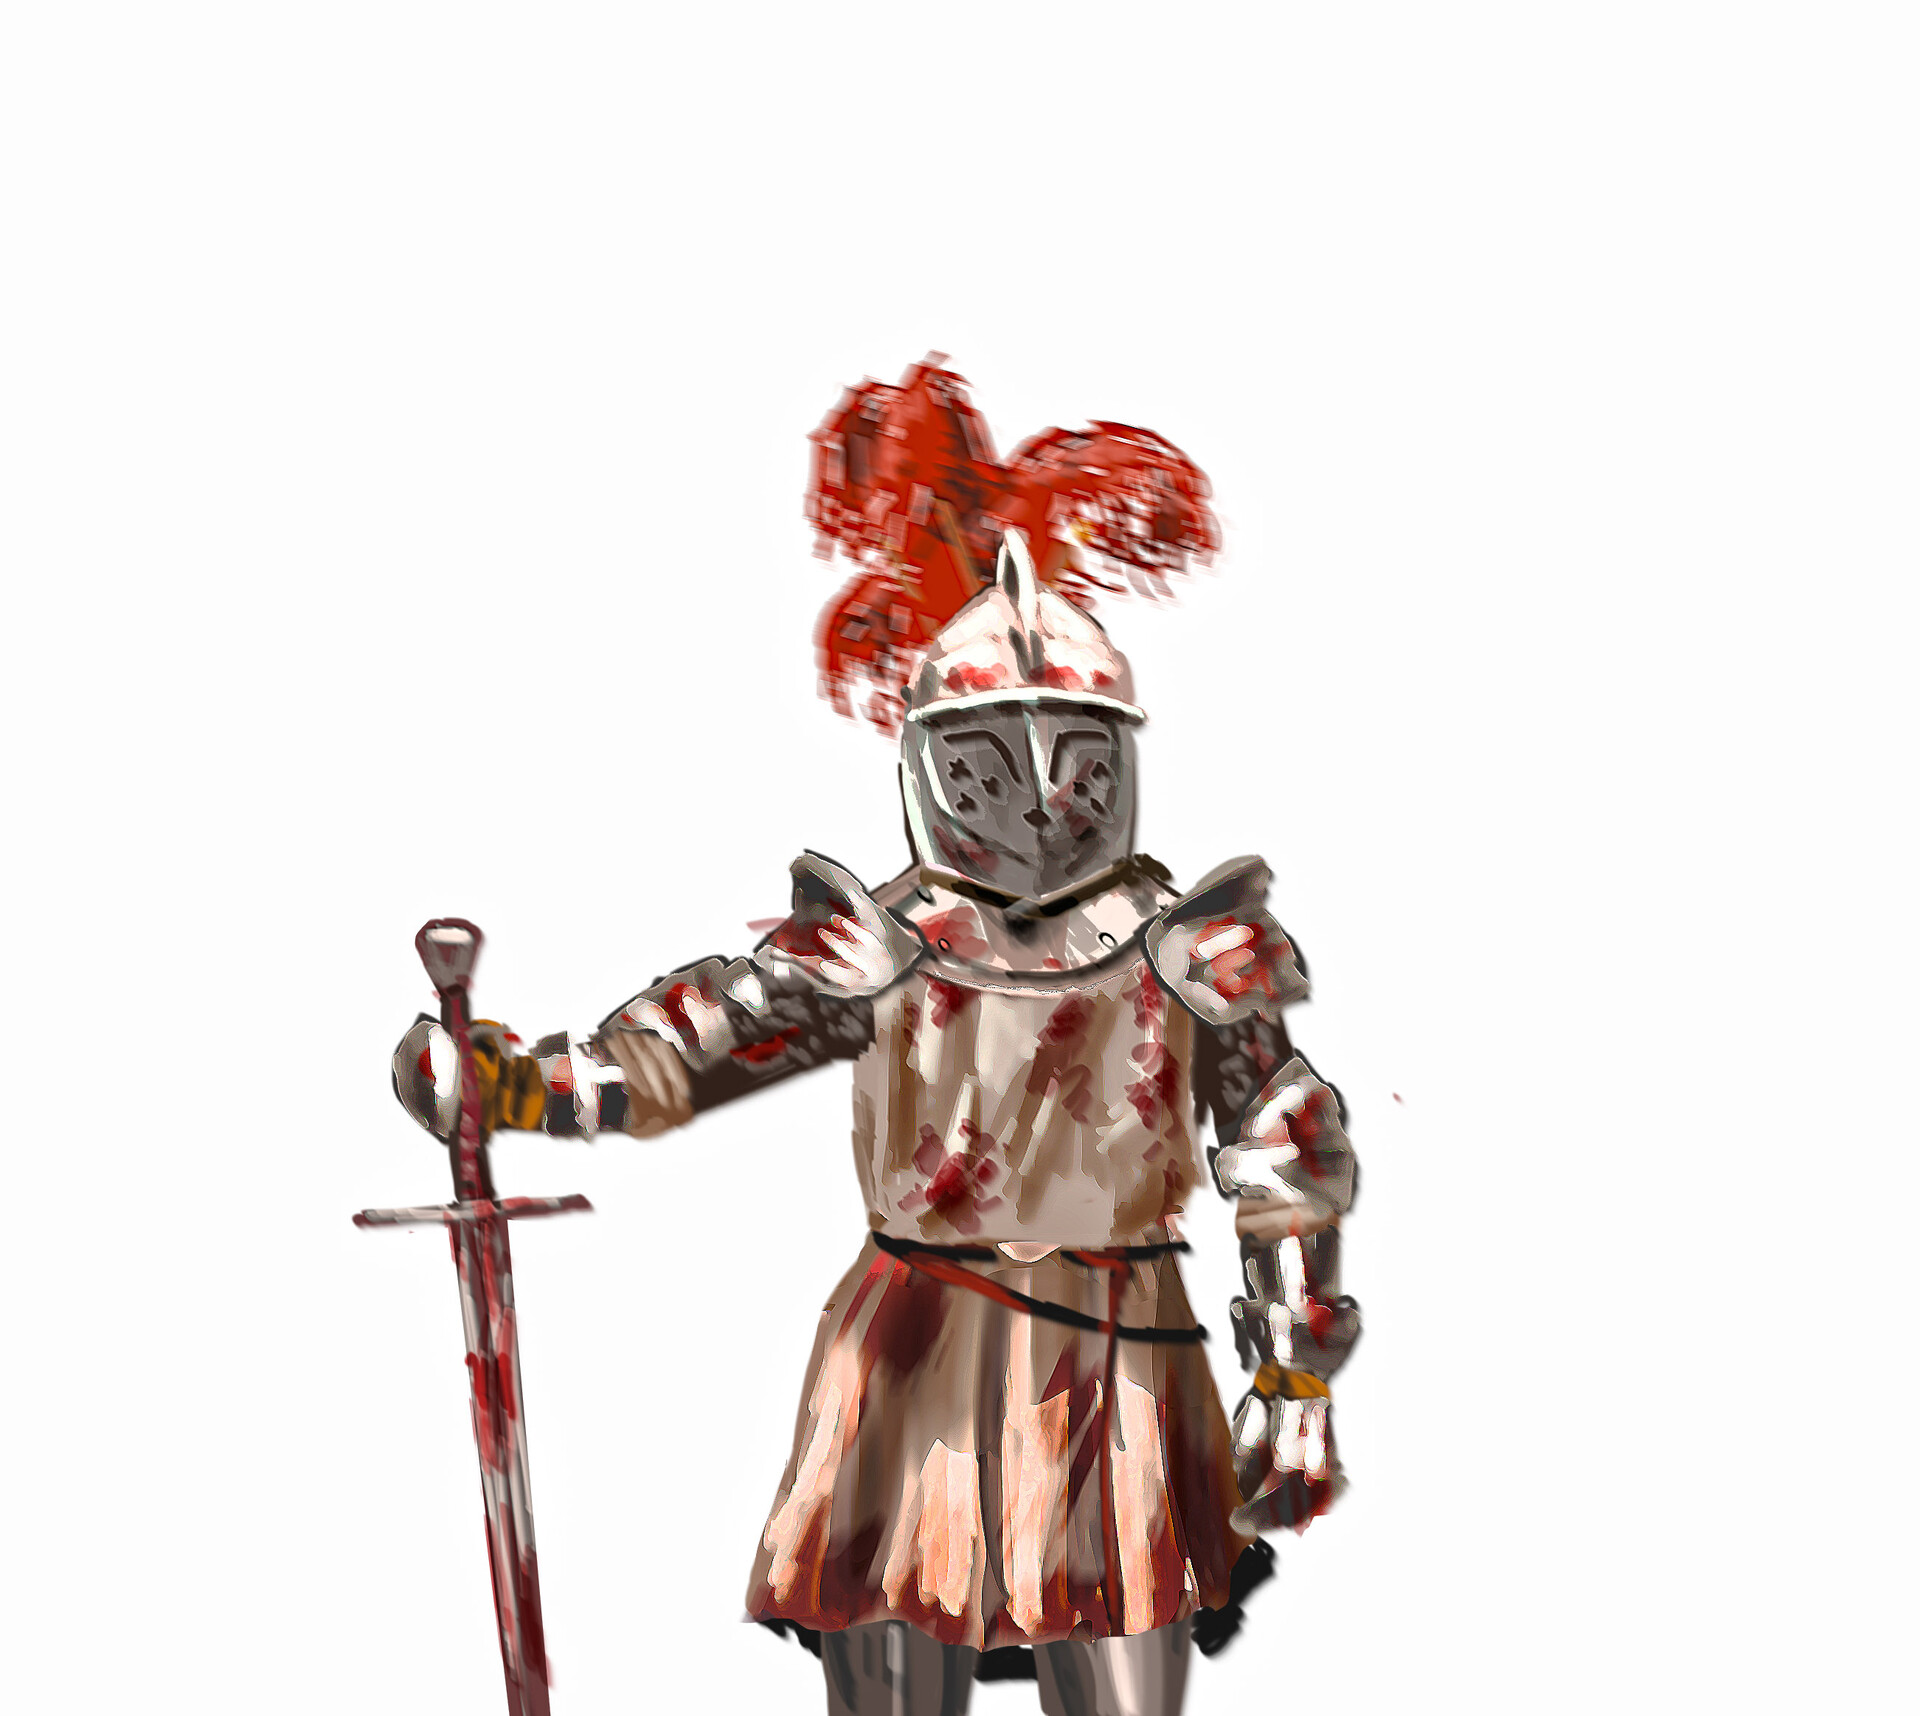 ArtStation - Knight with a Savoyard